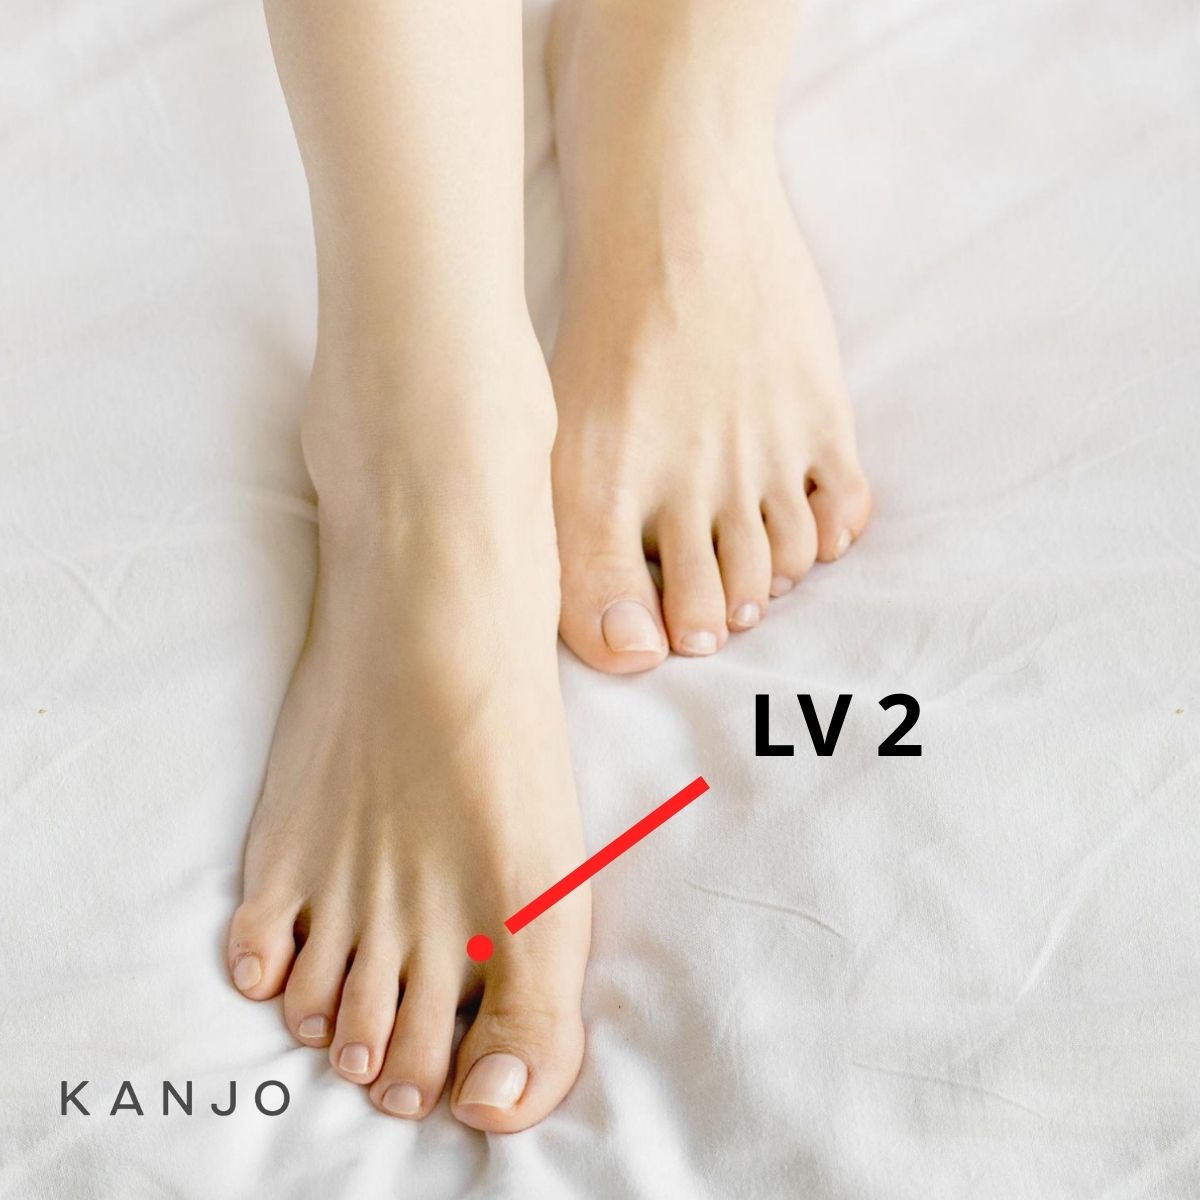 Liver 2 (LV 2) - Xingjian or Moving Between